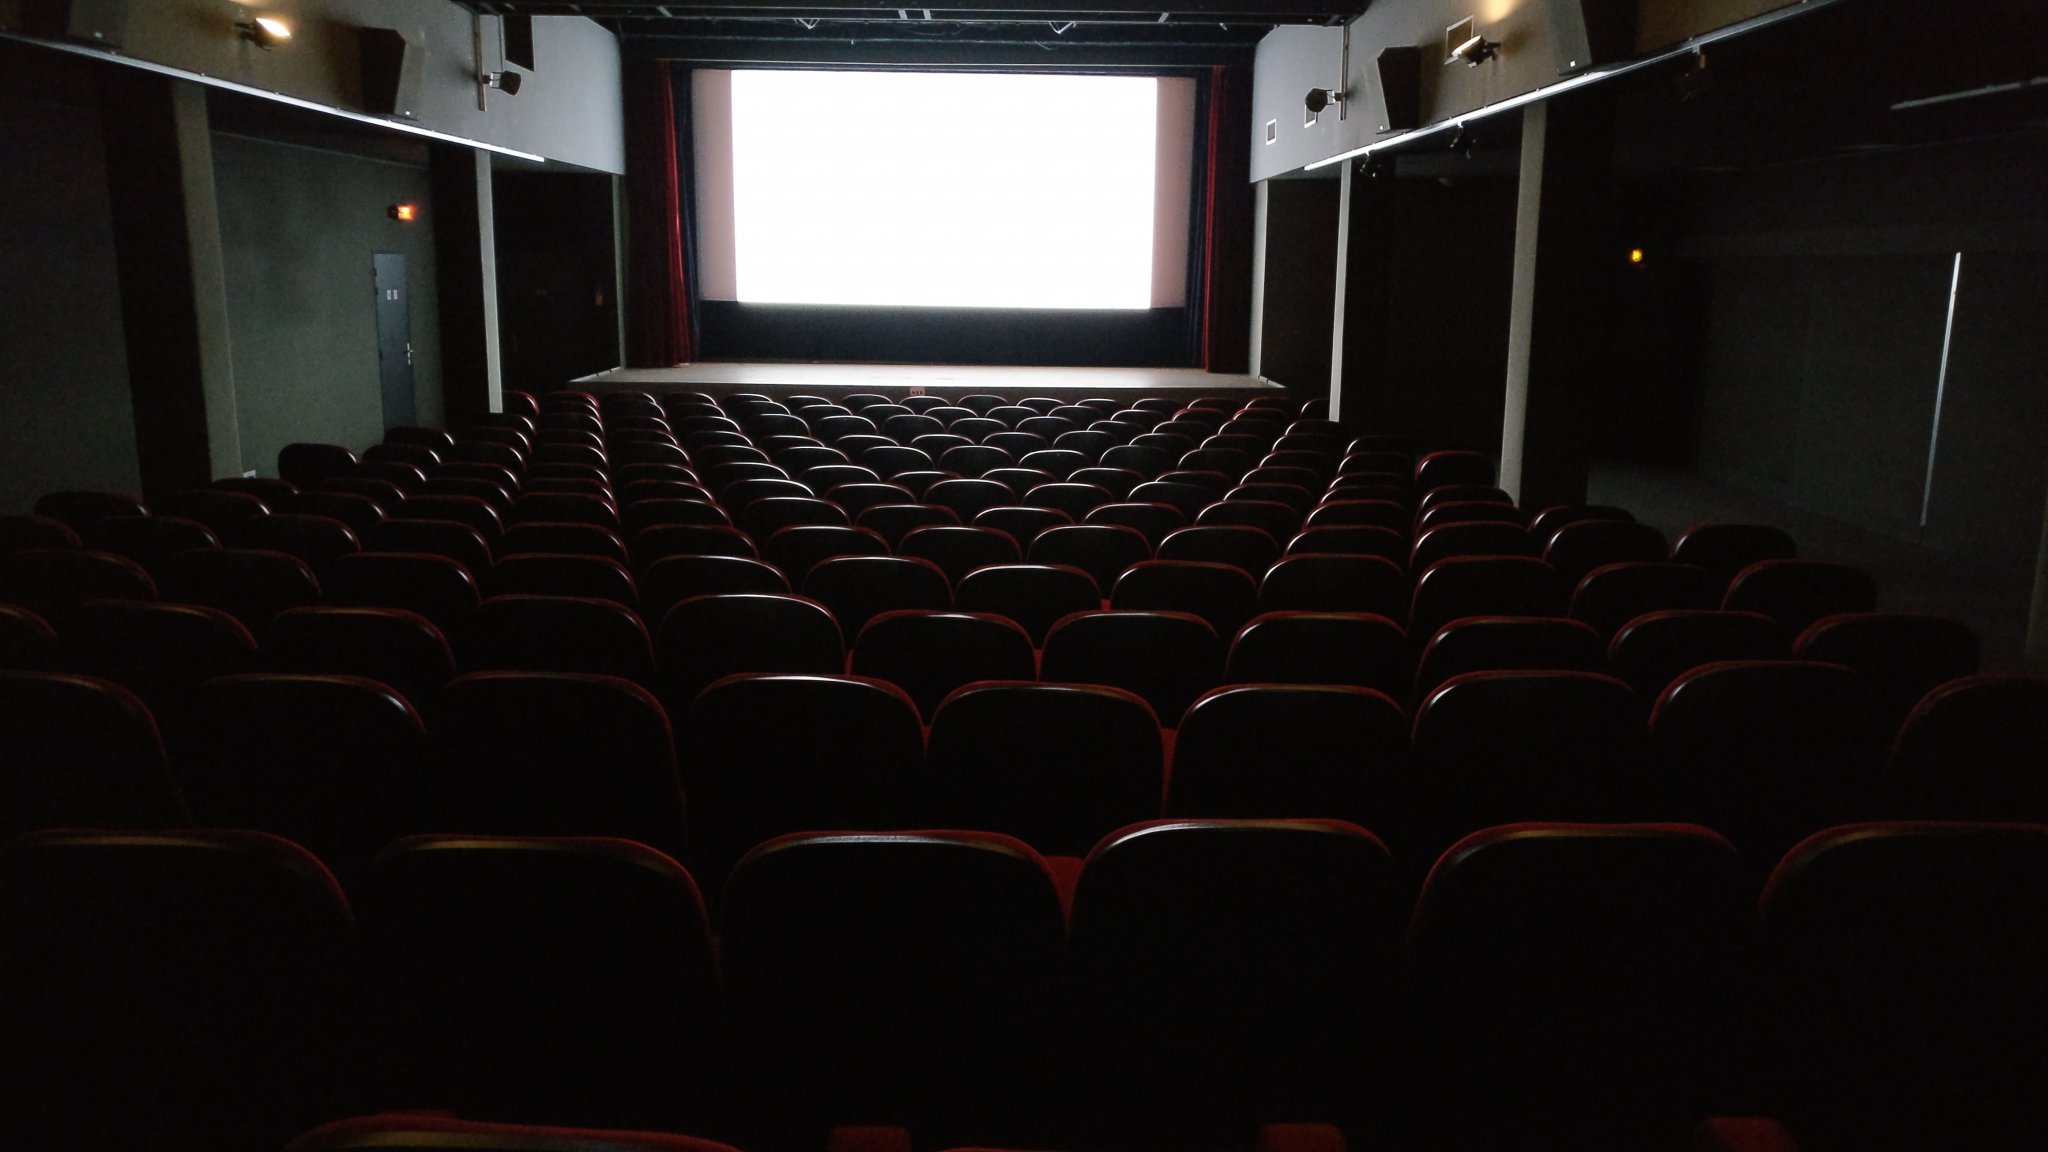 Cinema seats showing white screen